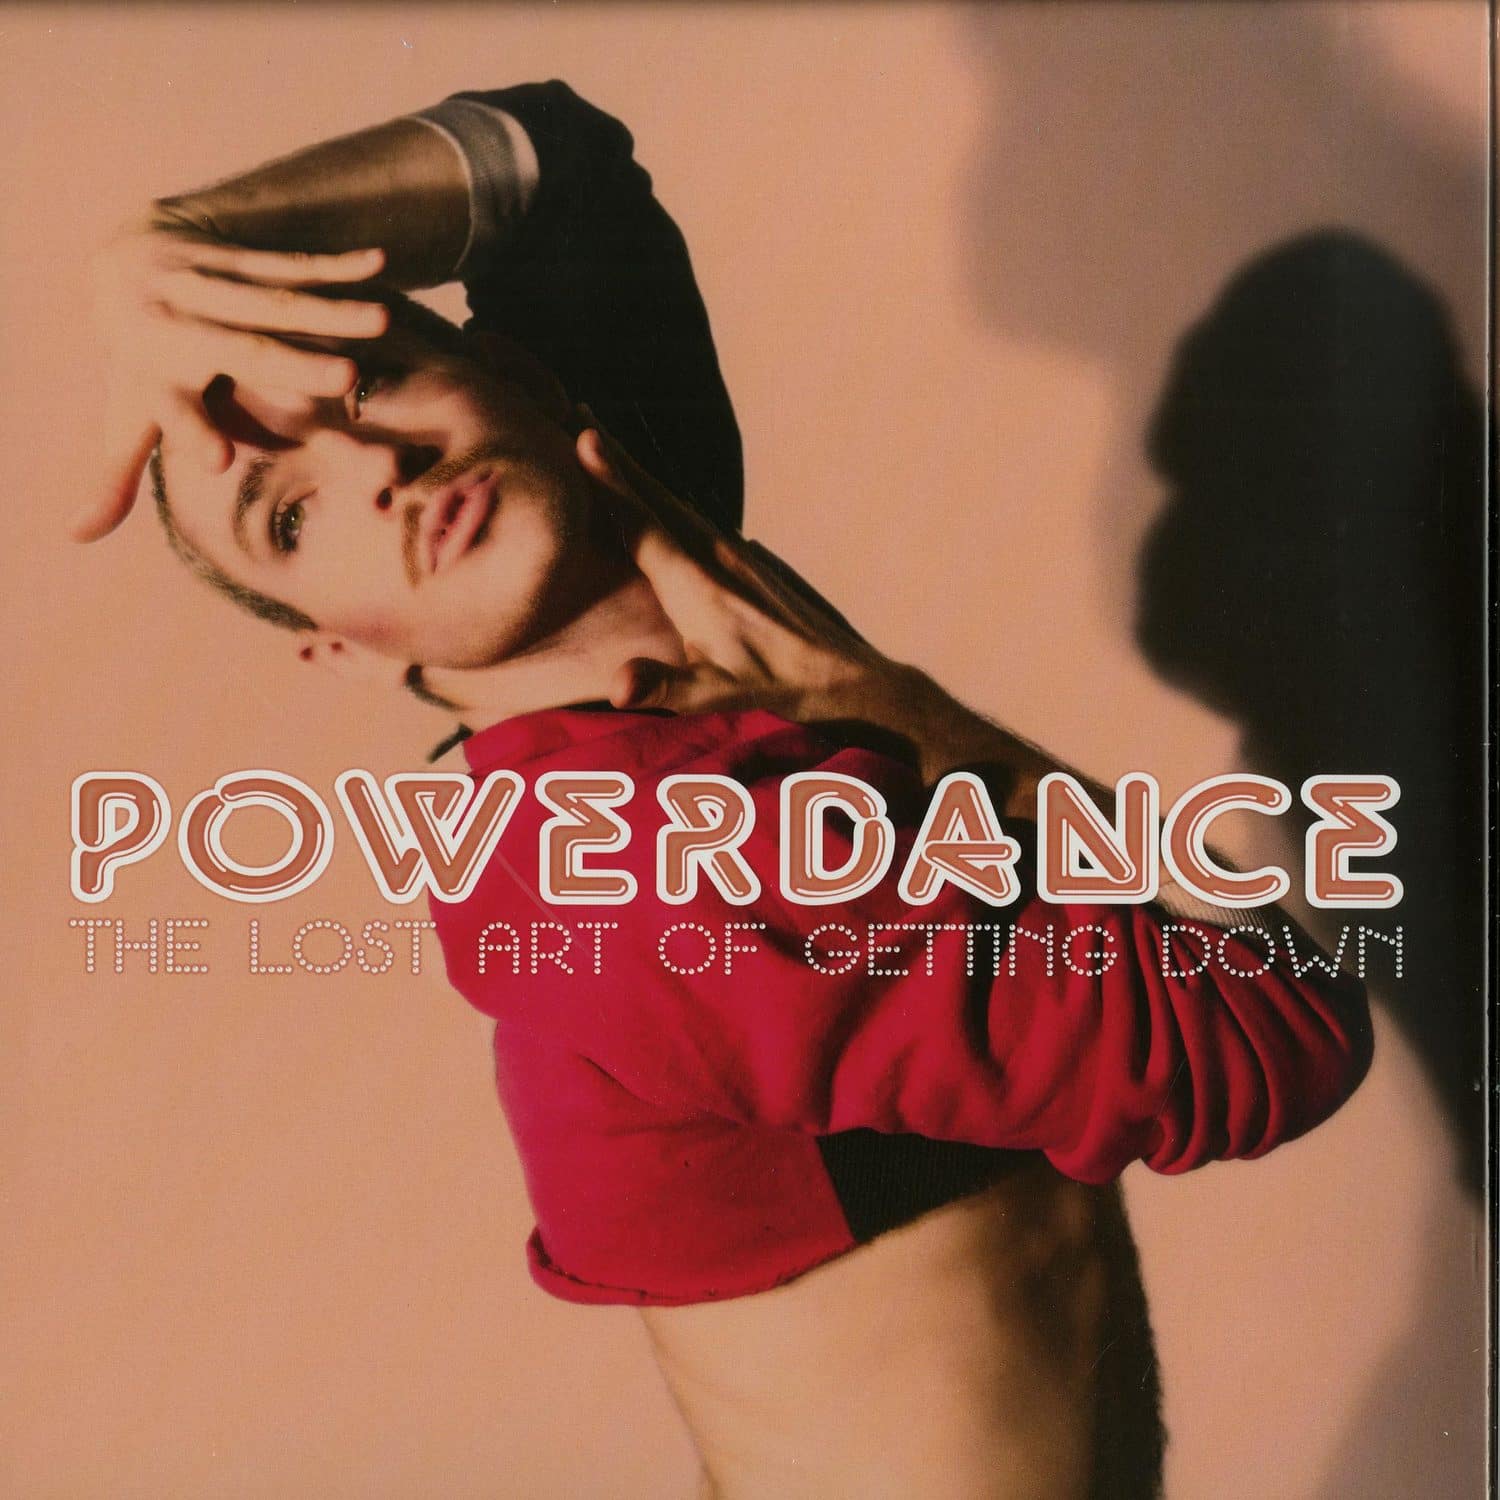 Powerdance - ART OF GETTING DOWN 